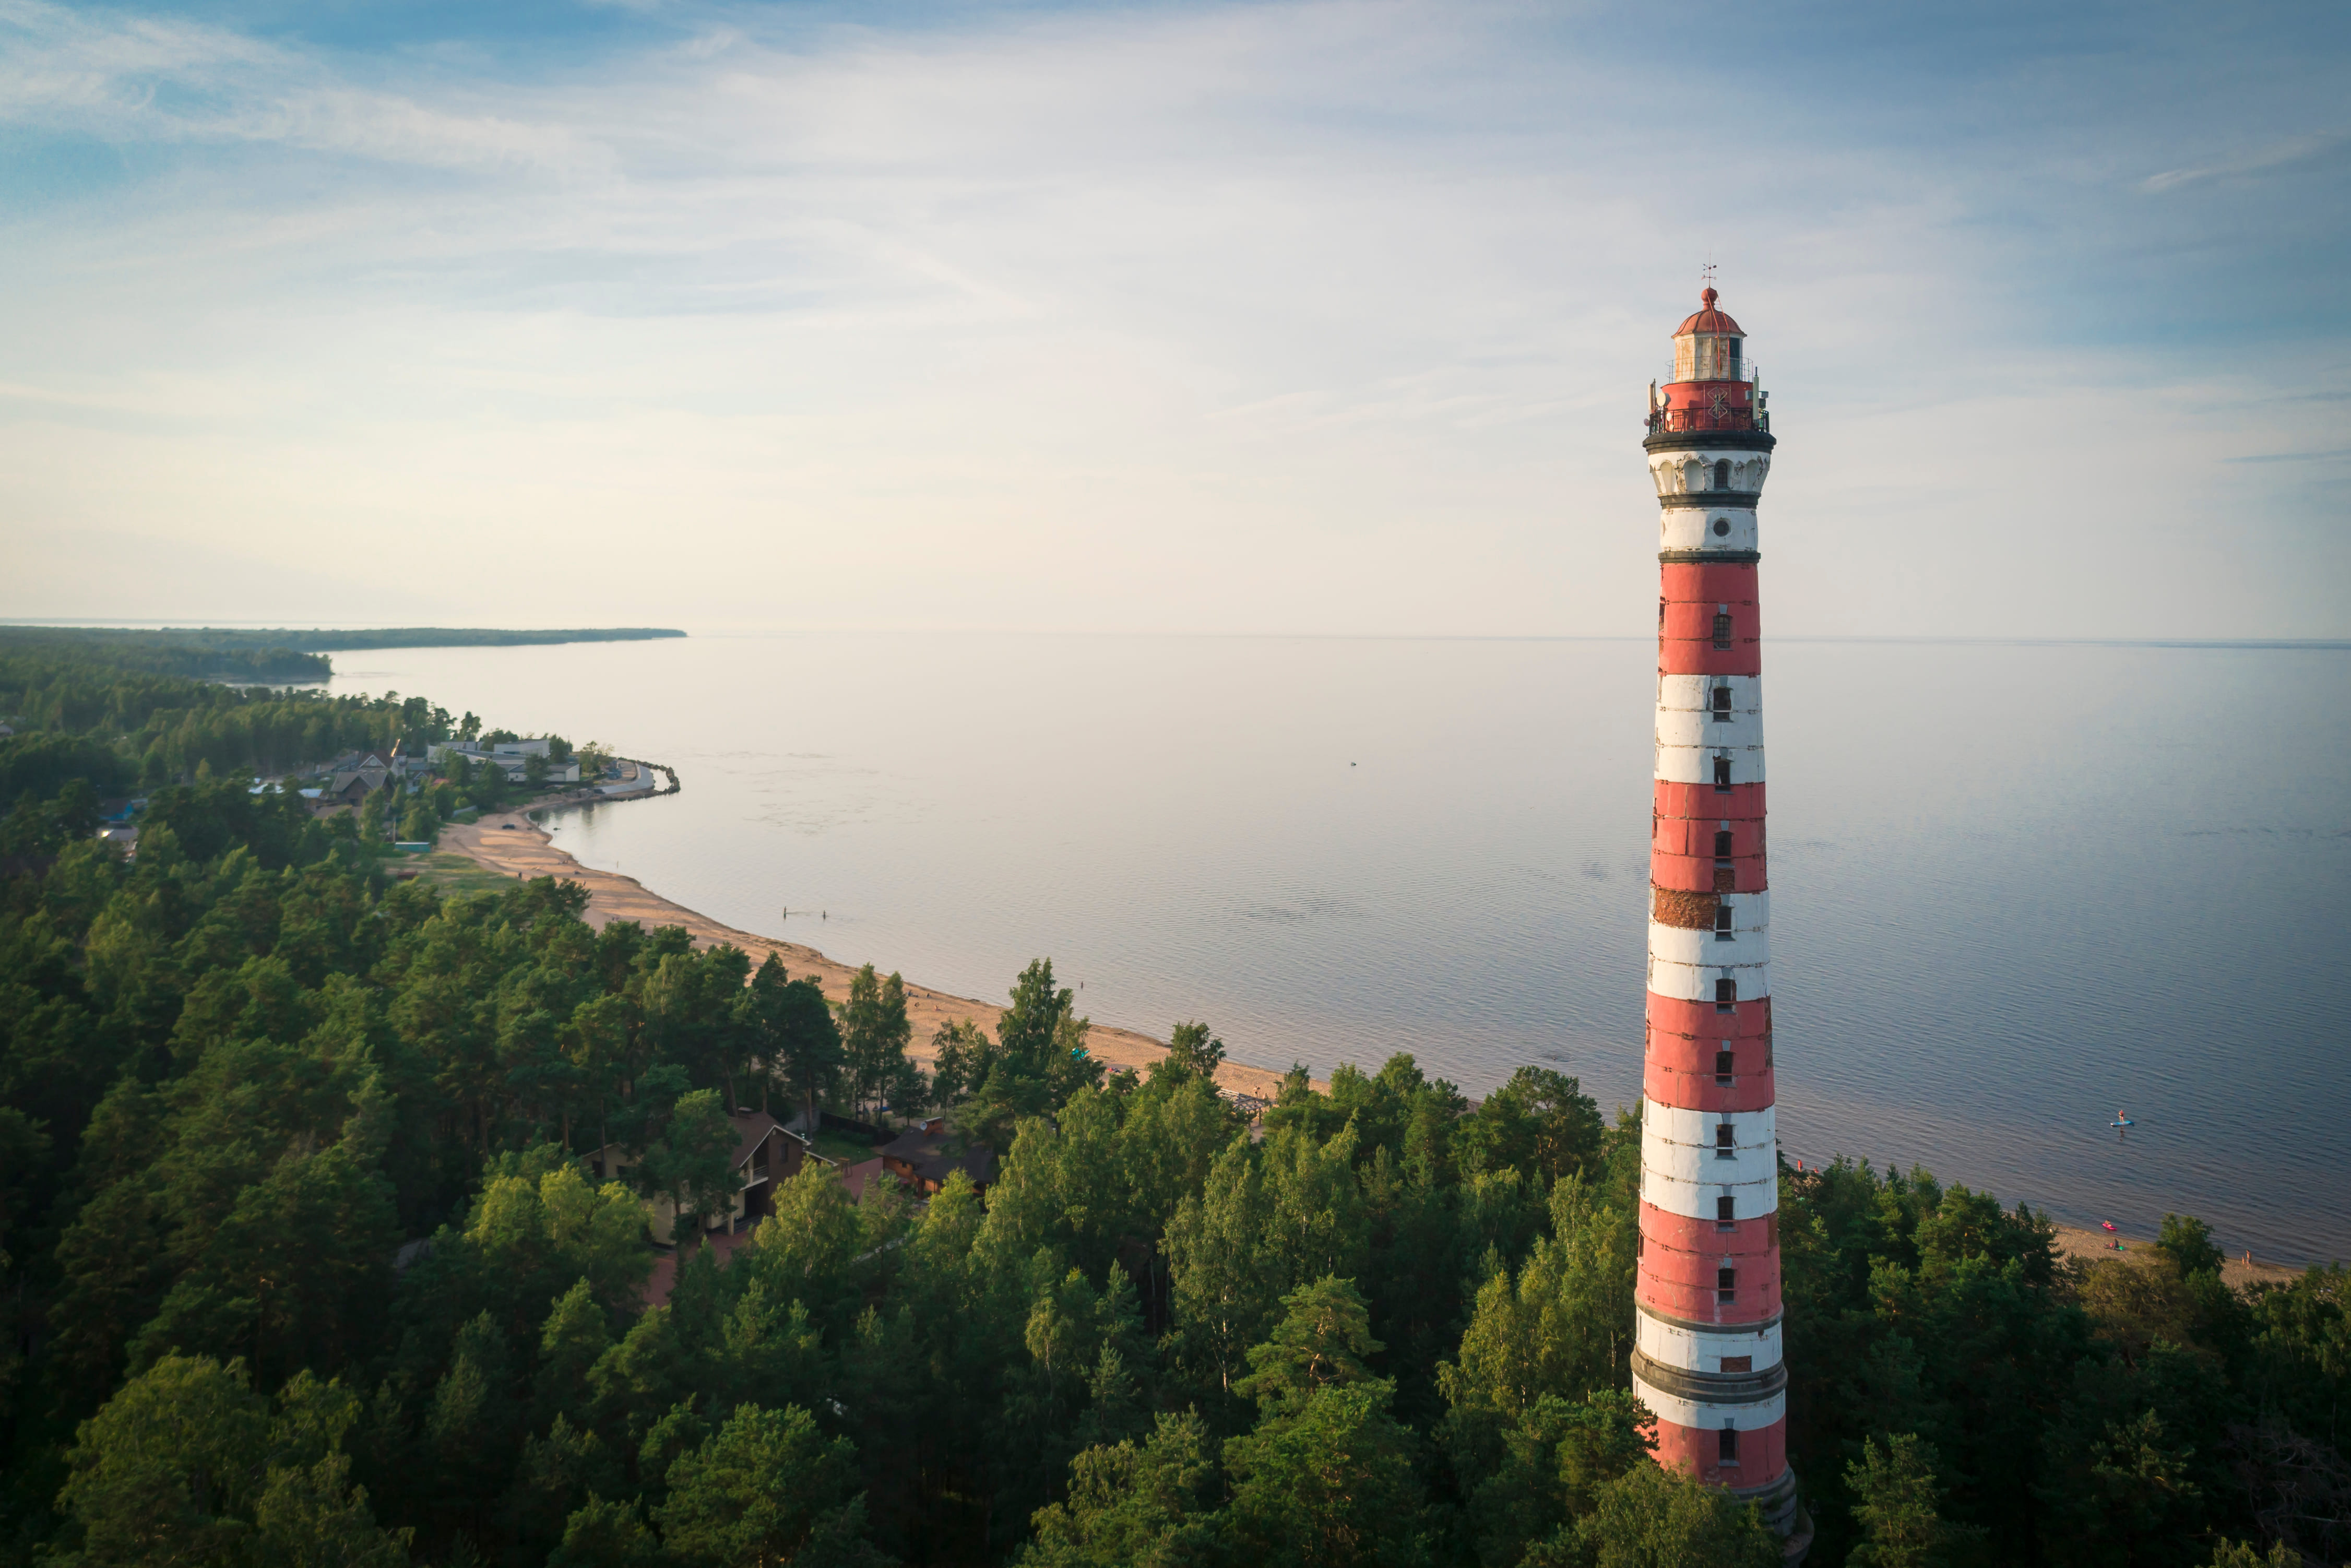 Романтично и атмосферно: маяки недалеко от Санкт-Петербурга